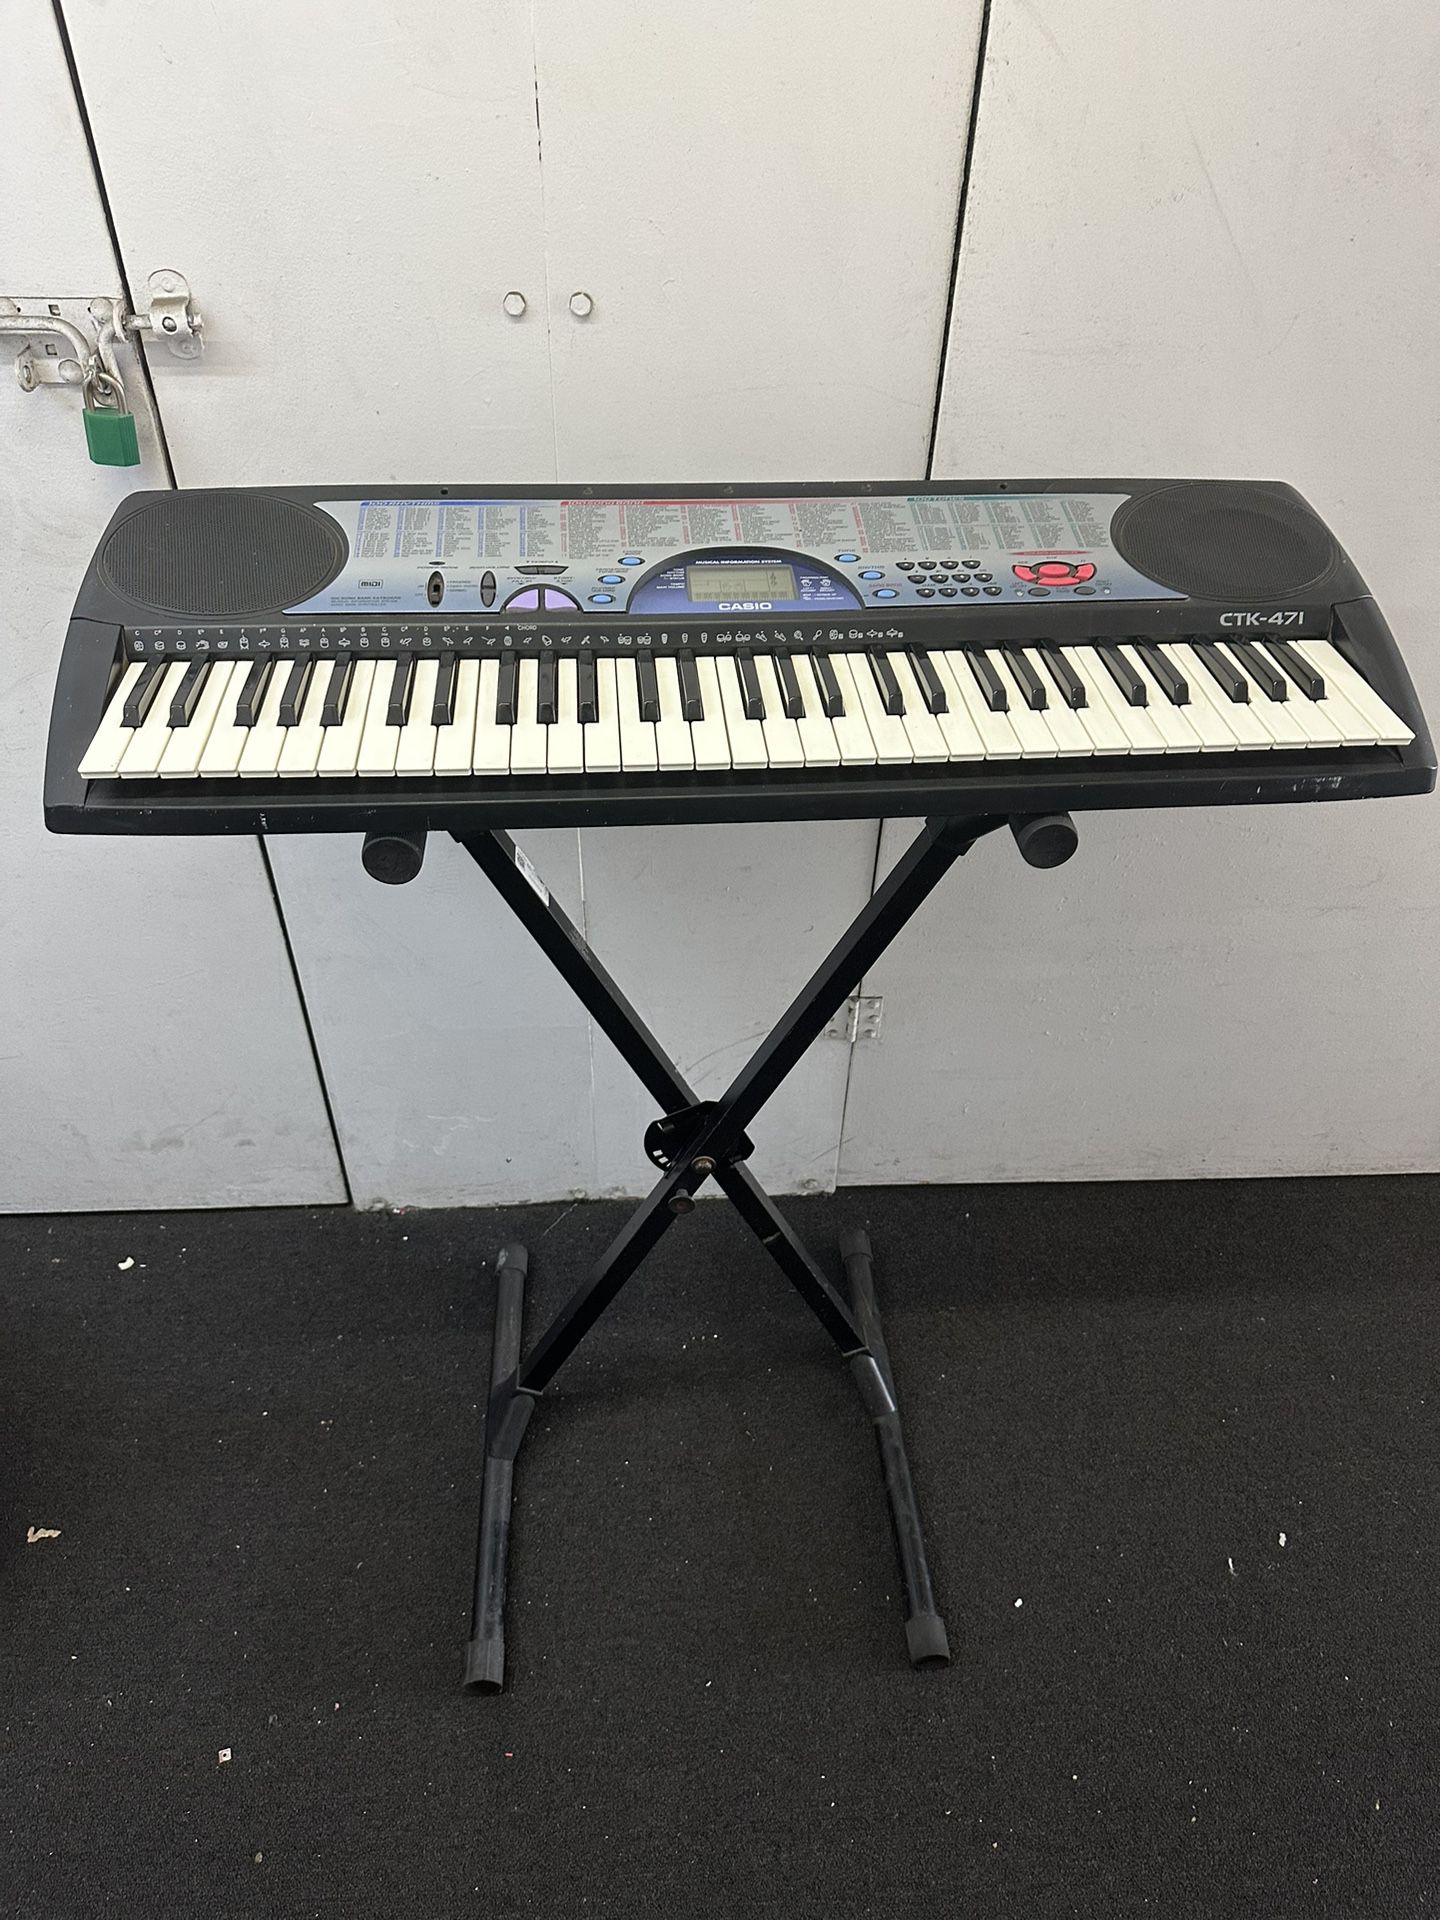 Vintage Casio CTK-471 Electronic Musical Keyboard MIDI compatible-61 Keys